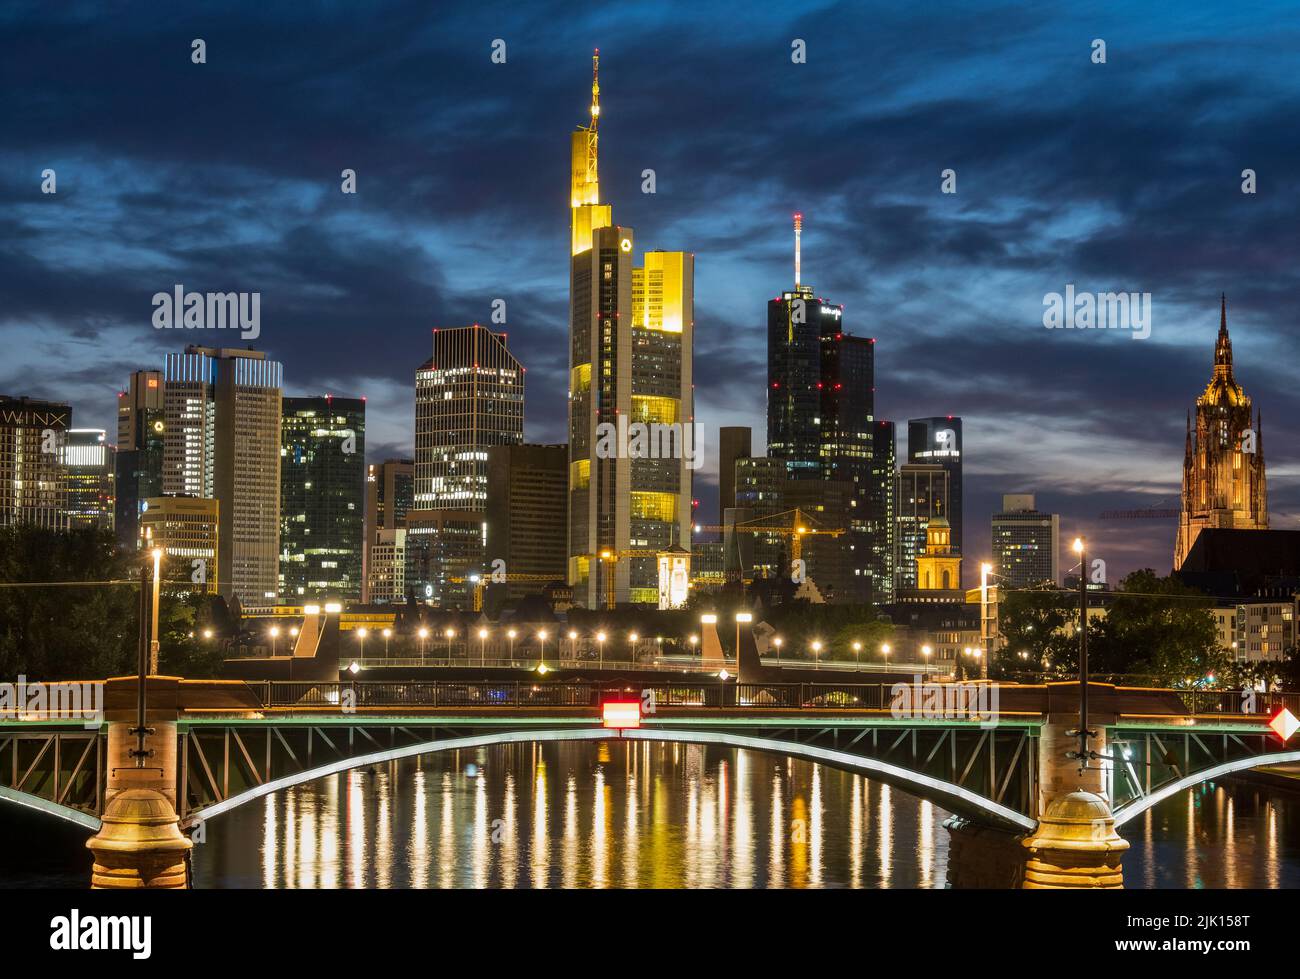 The River Main, Ignatz Bubis Bridge, Dom Cathedral and Frankfurt city skyline, Frankfurt, Hesse, Germany, Europe Stock Photo